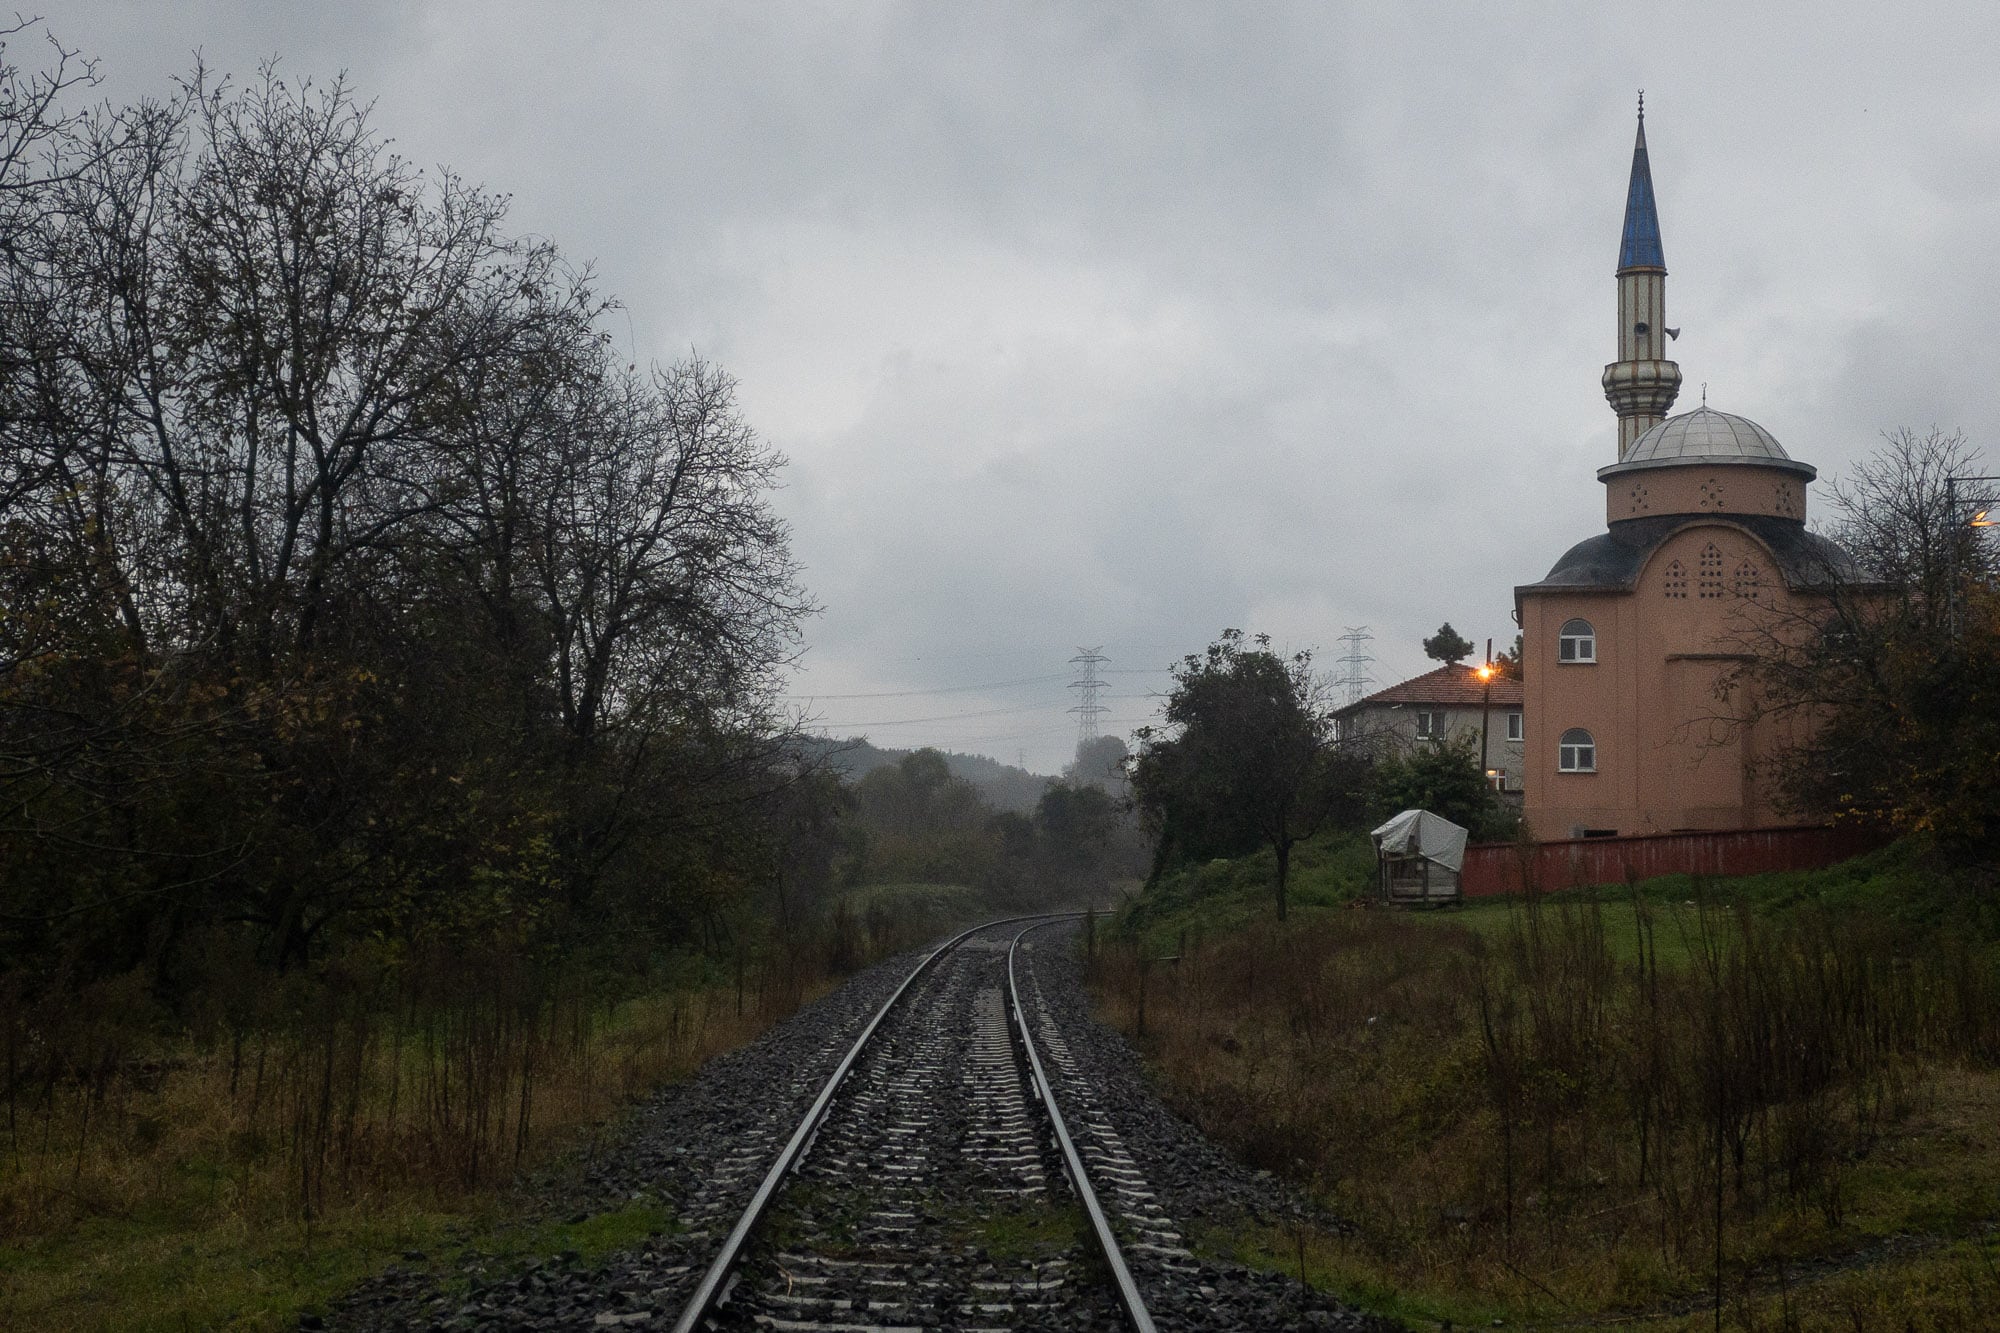 The railroad at Derecikören